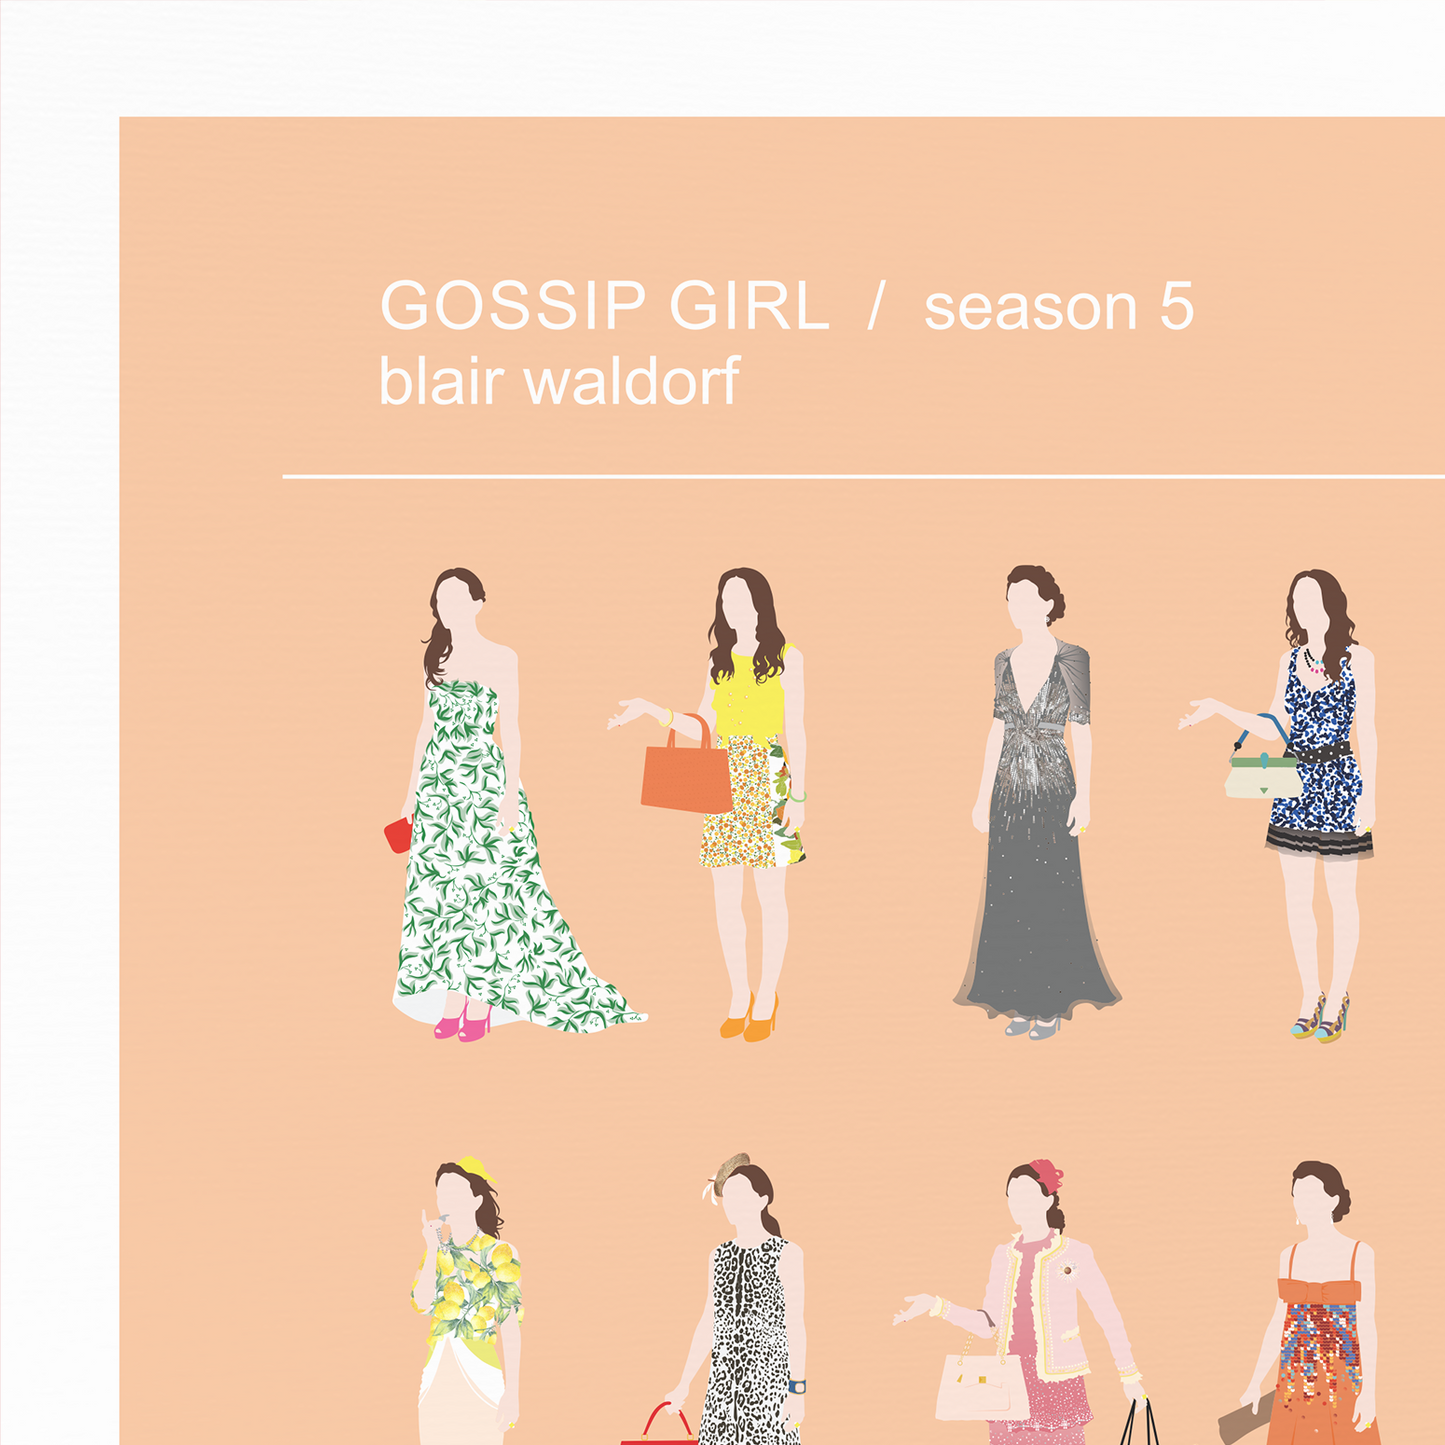 Blair Waldorf fashion poster, Season 5 of Gossip Girl